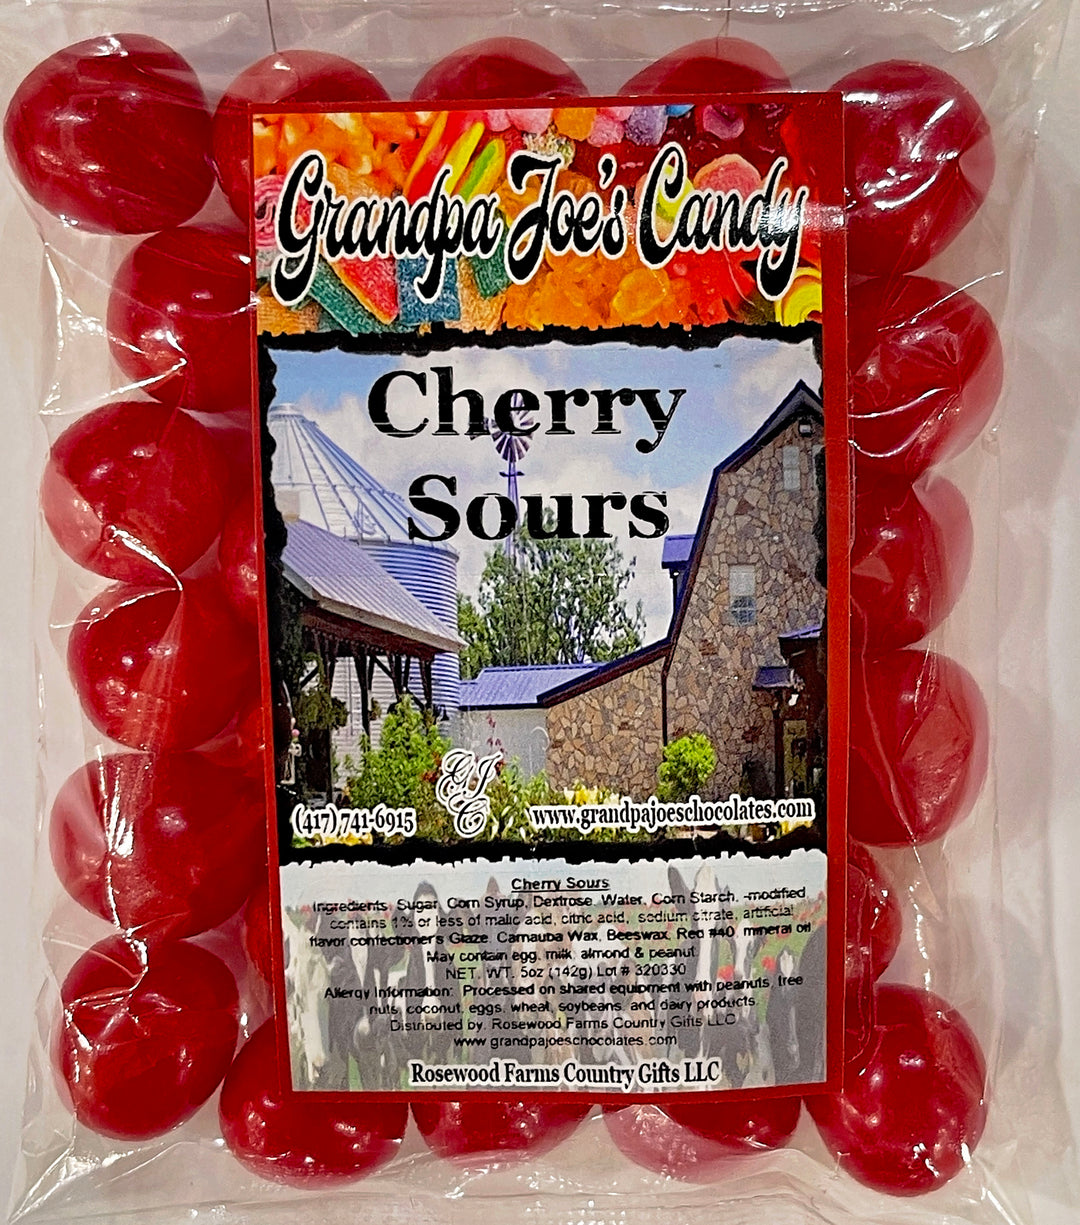 Cherry Sours - Grandpa Joe's Chocolates